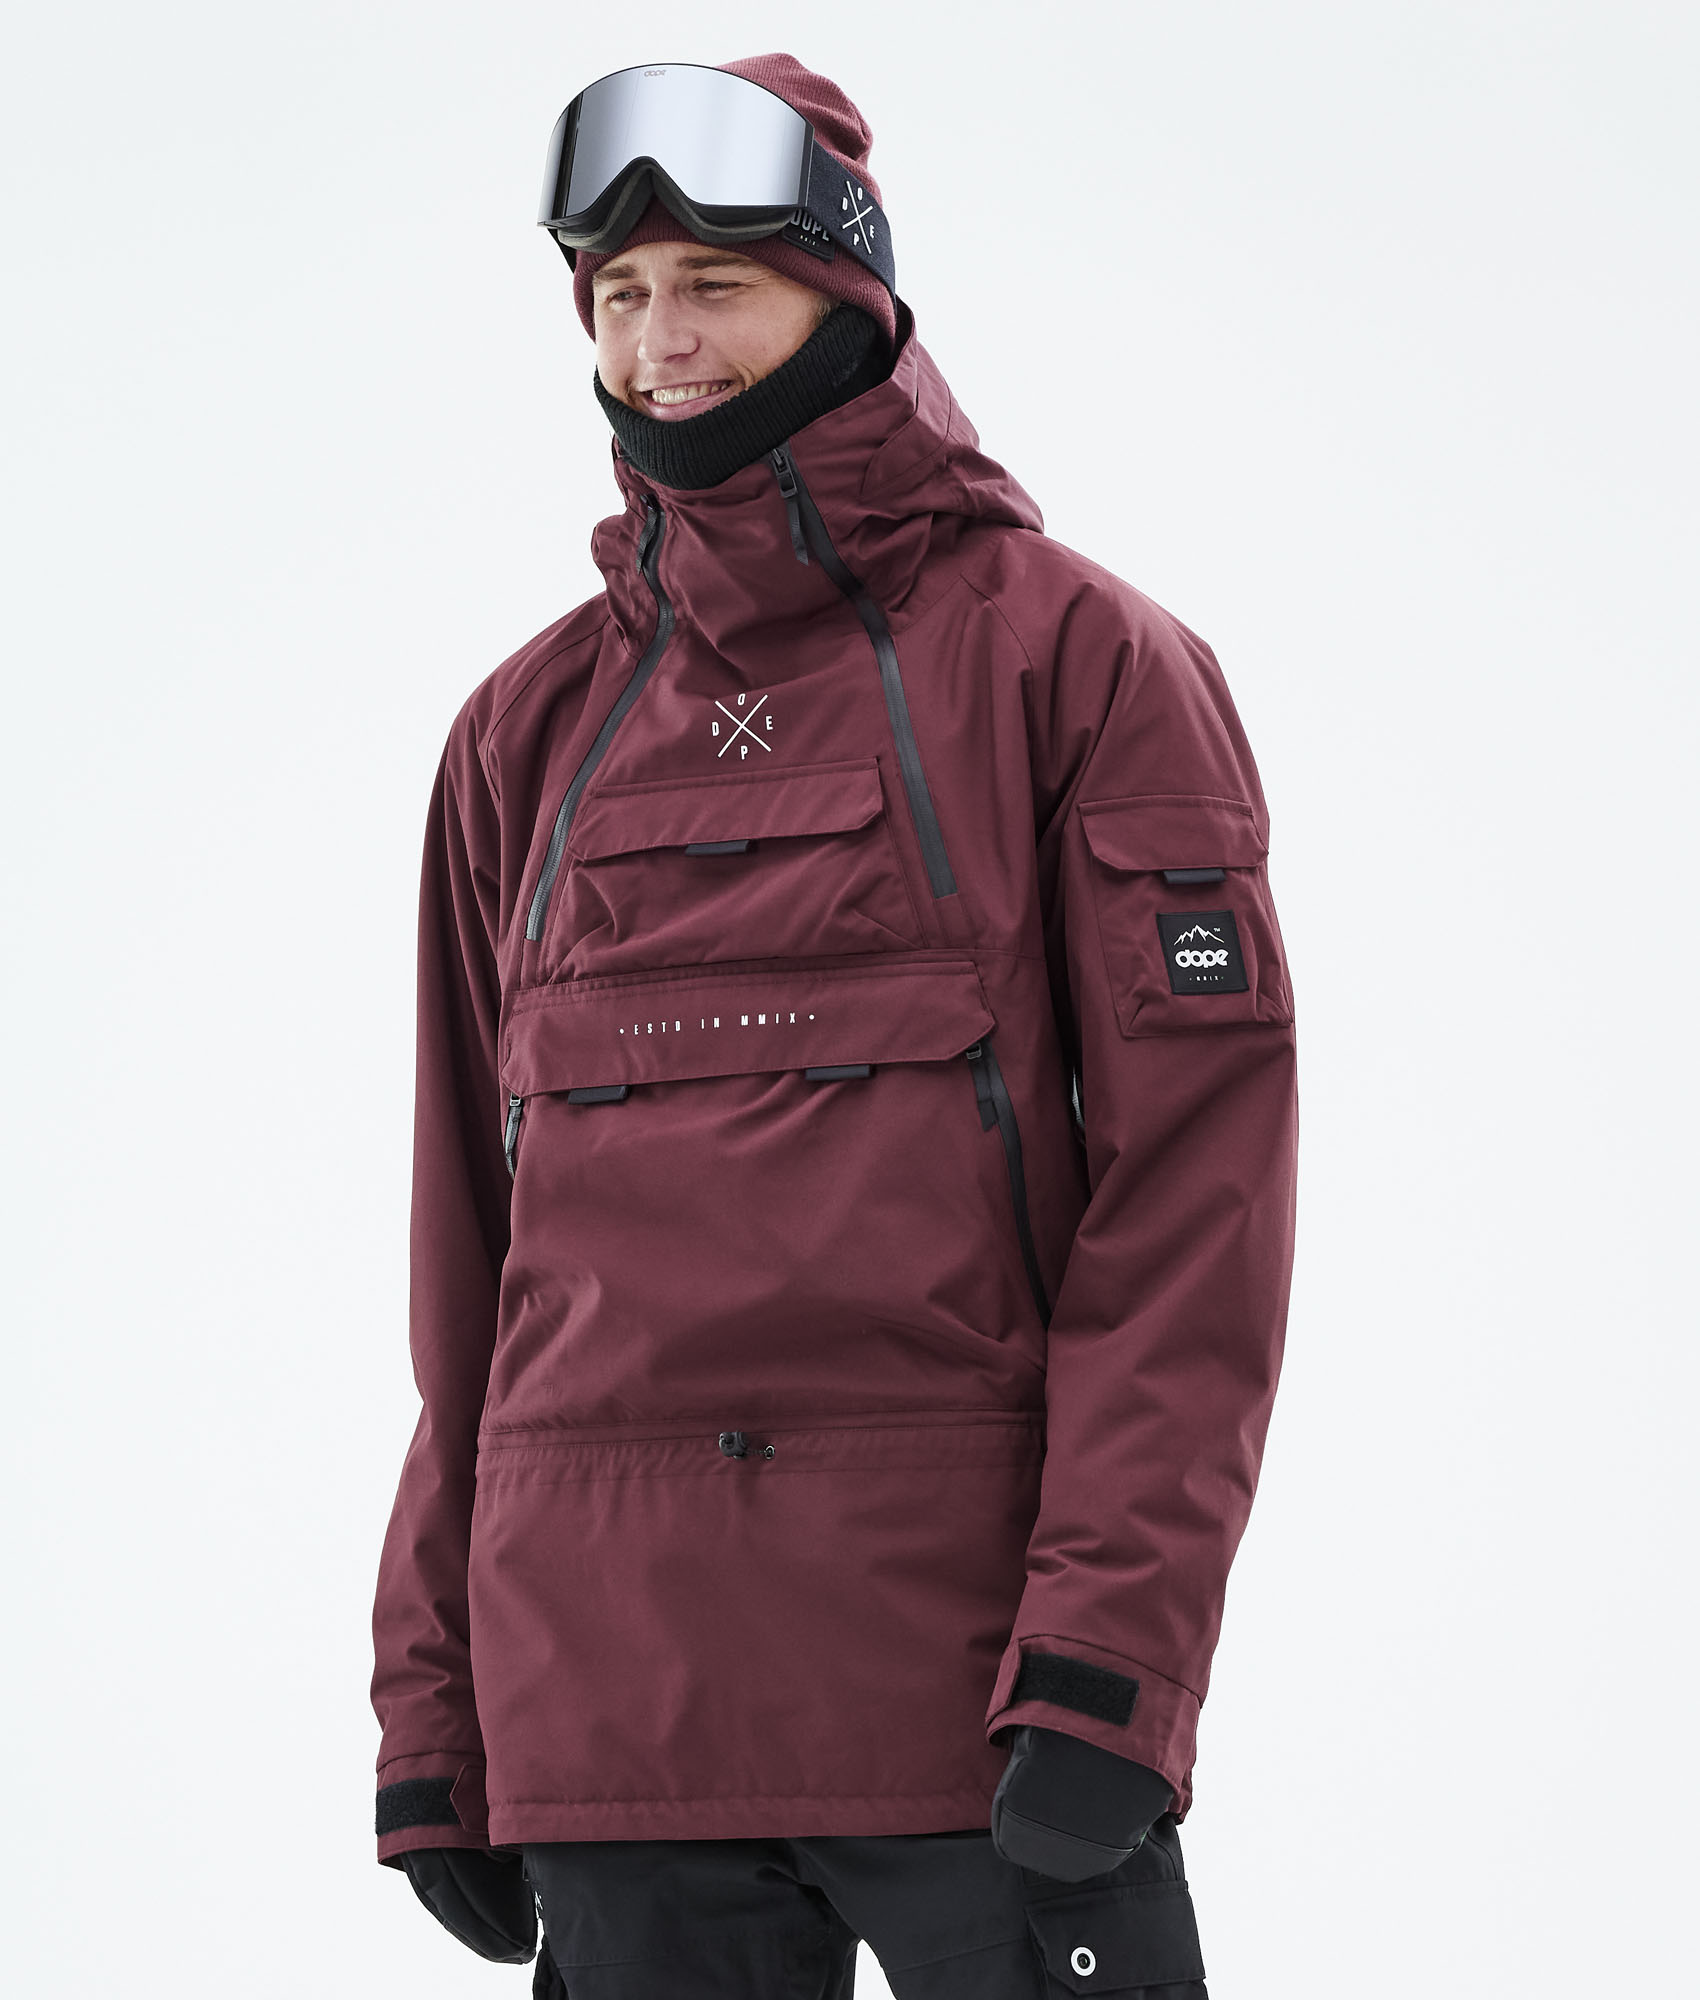 2019 snowboard jacket